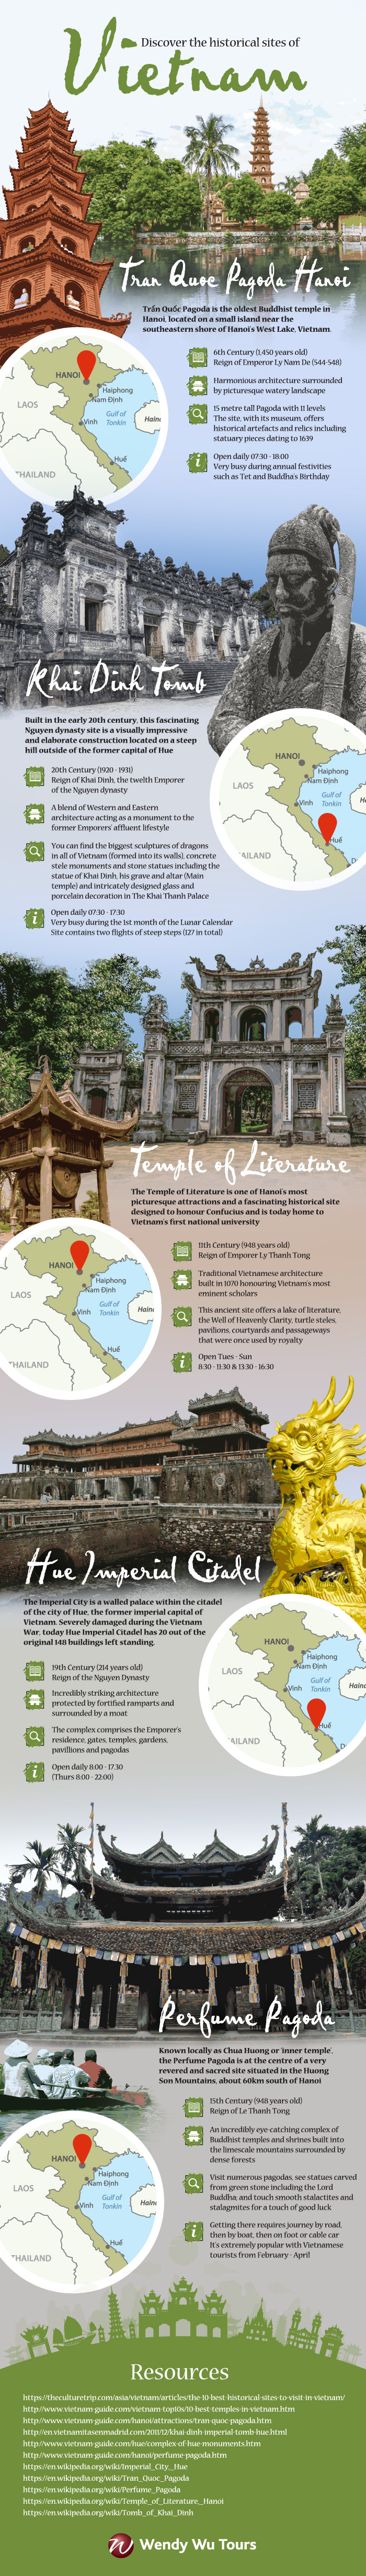 Discovering Vietnam’s Historical Landmarks - Infographic